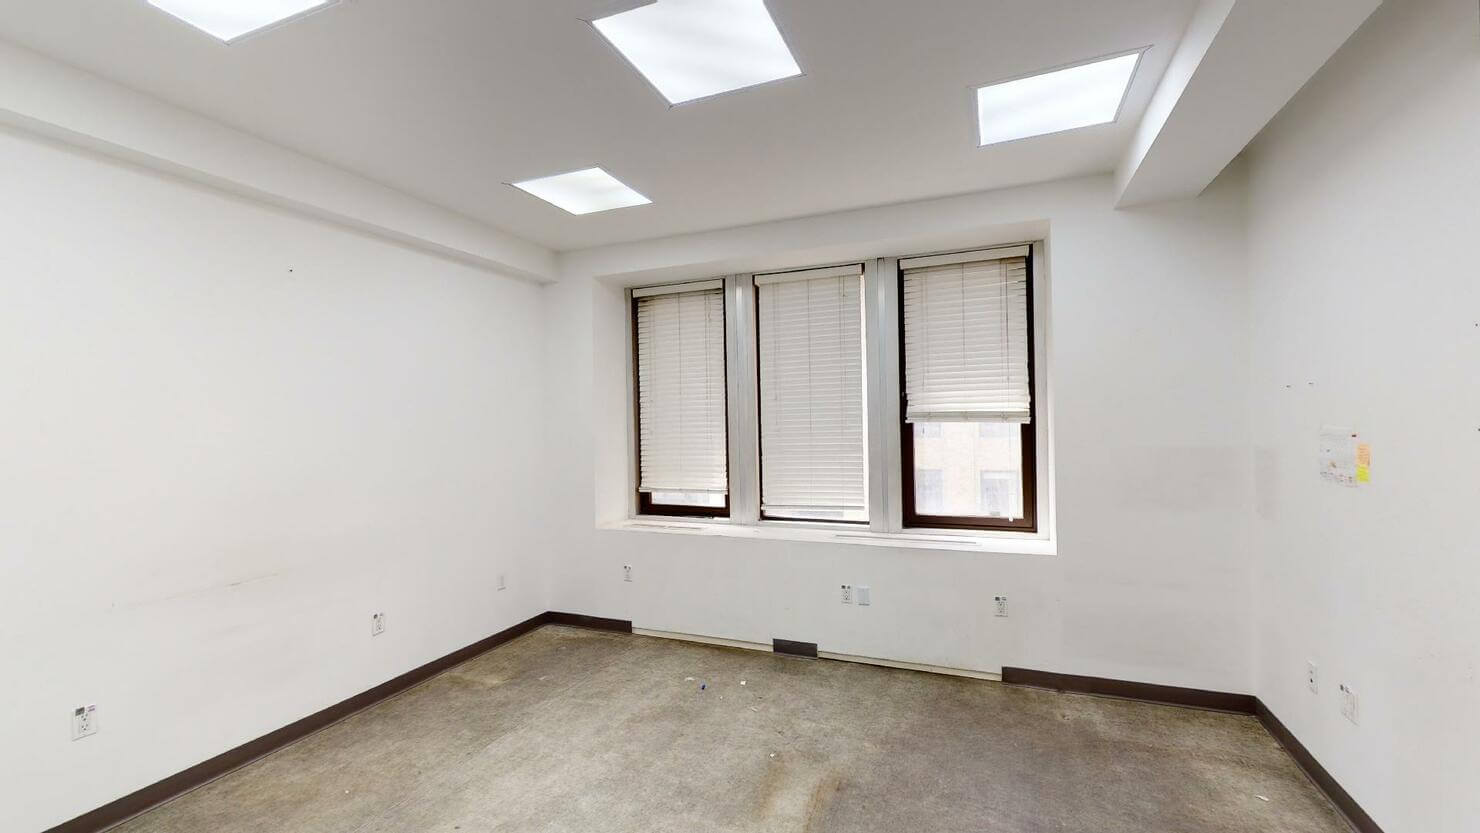 369 Lexington Avenue Office Space - Treatment Room